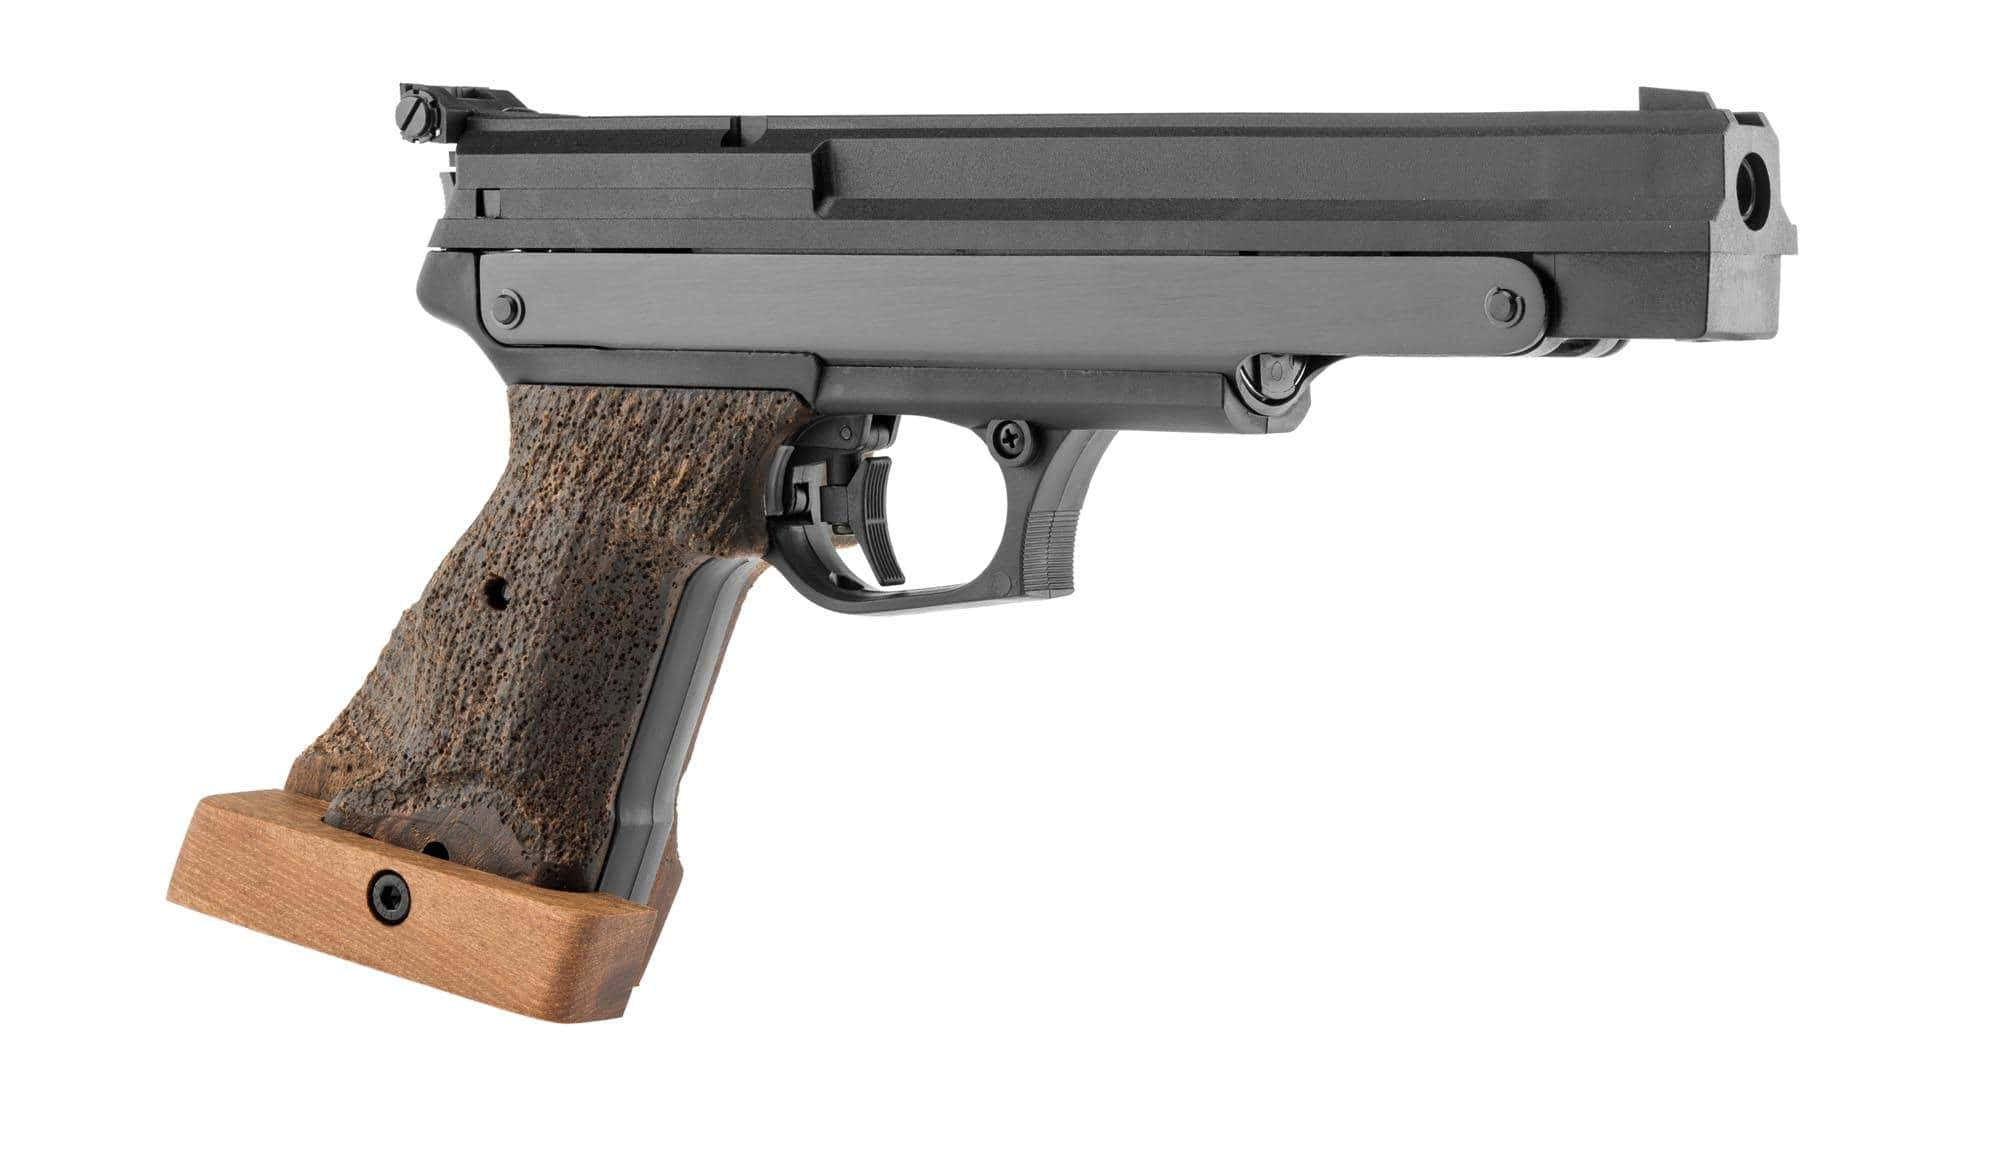 Pistolet a plombs Air Comprimé RUGER MARK IV - NOIR Cal. 4.5mm